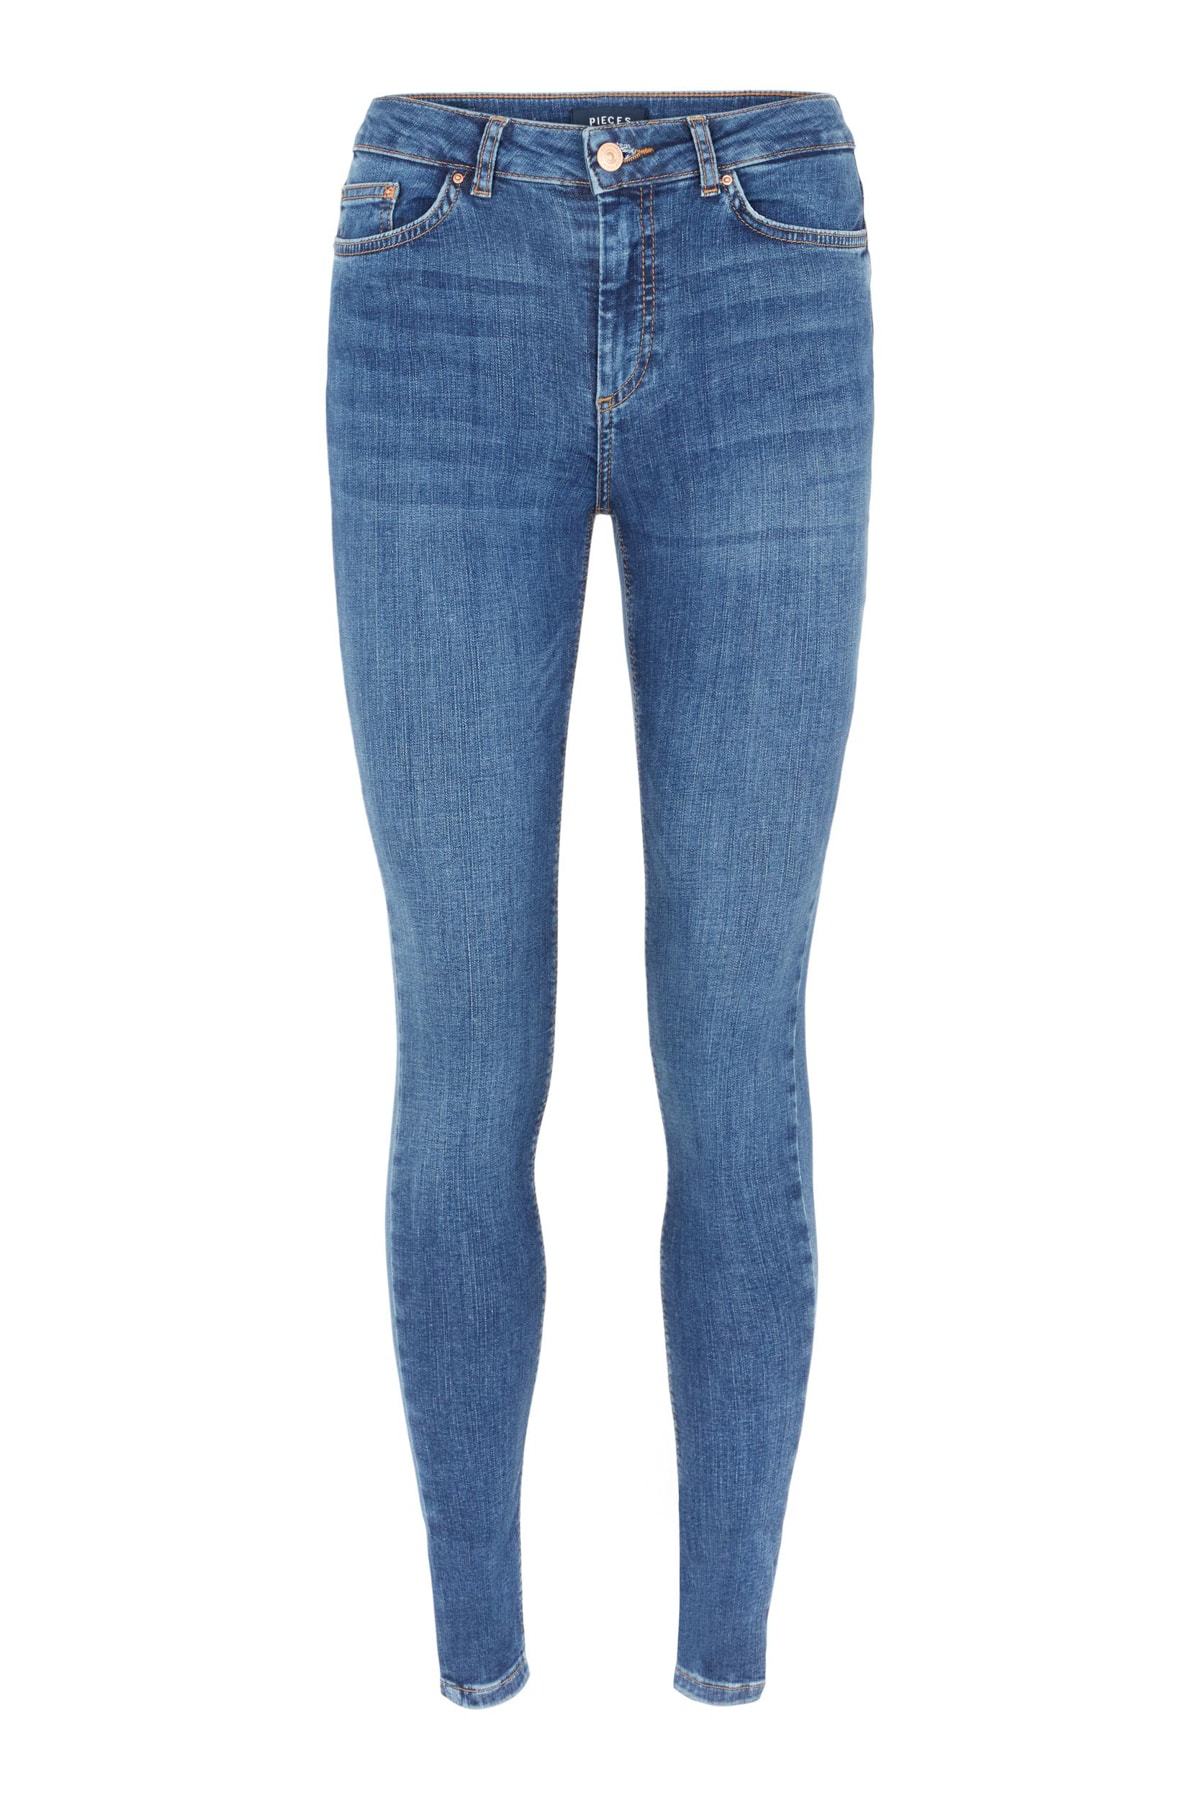 PIECES Jeans Blau Skinny Fast ausverkauft